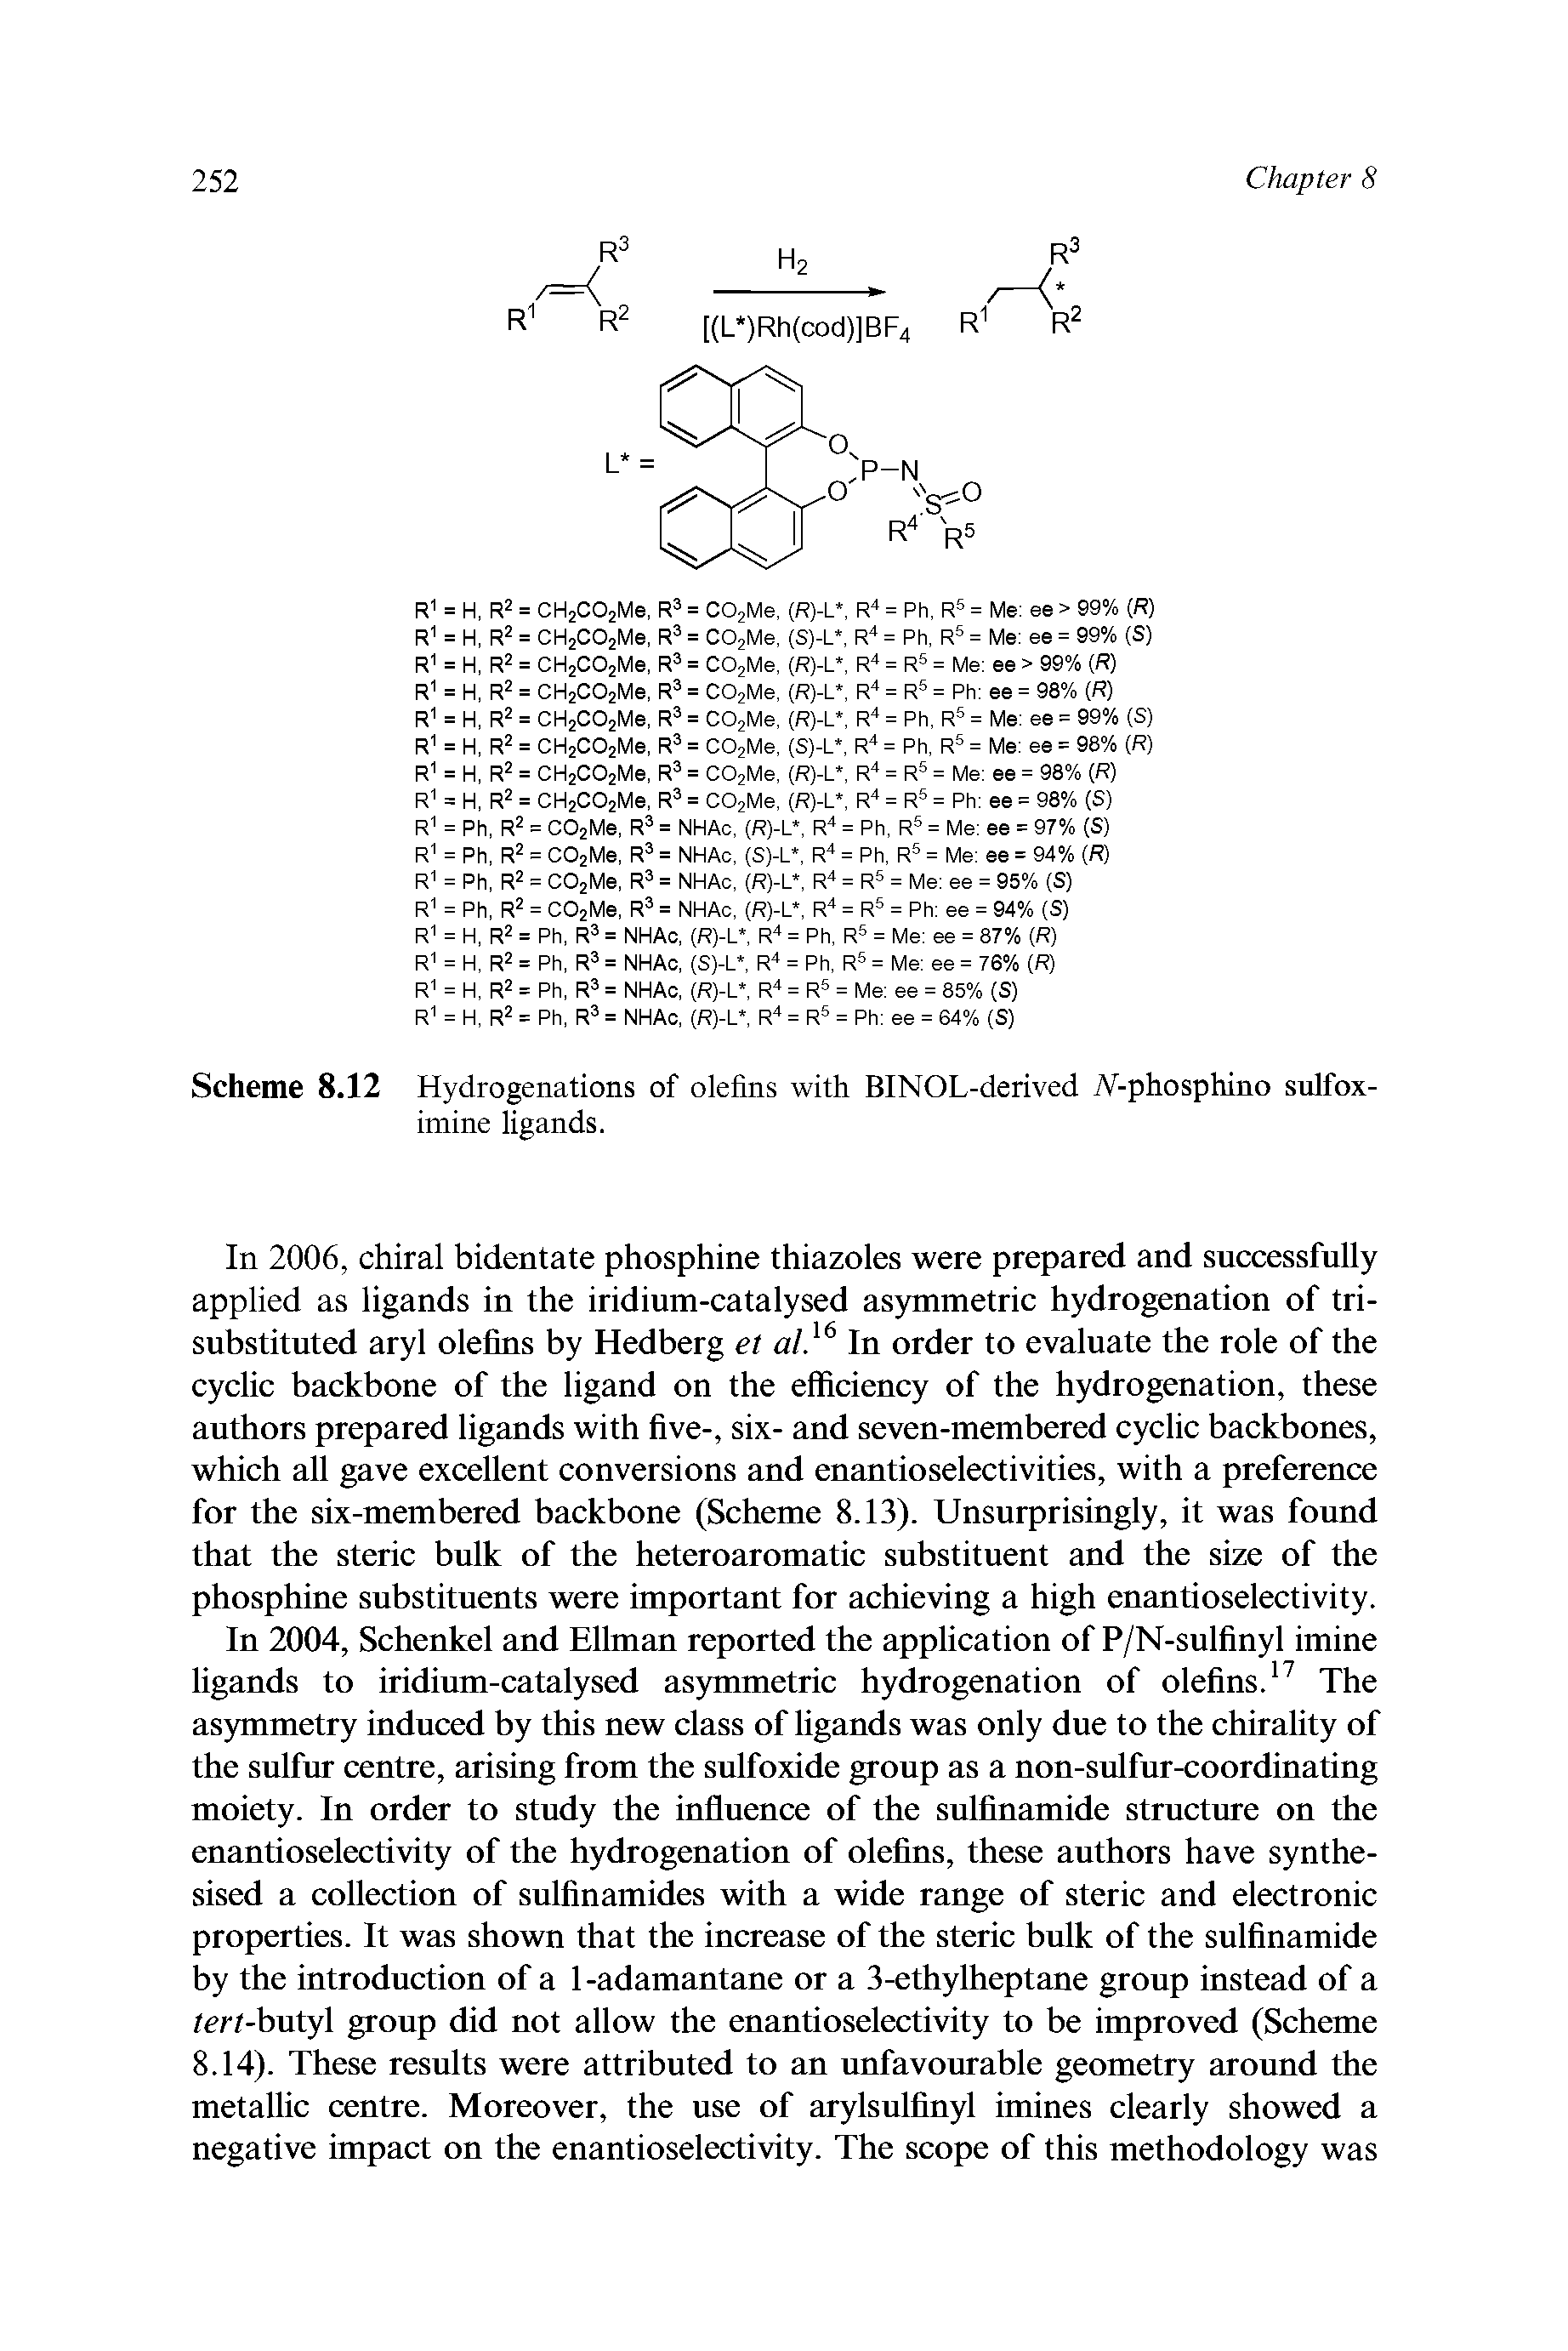 Scheme 8.12 Hydrogenations of olefins with BINOL-derived A -phosphino sulfox-imine ligands.